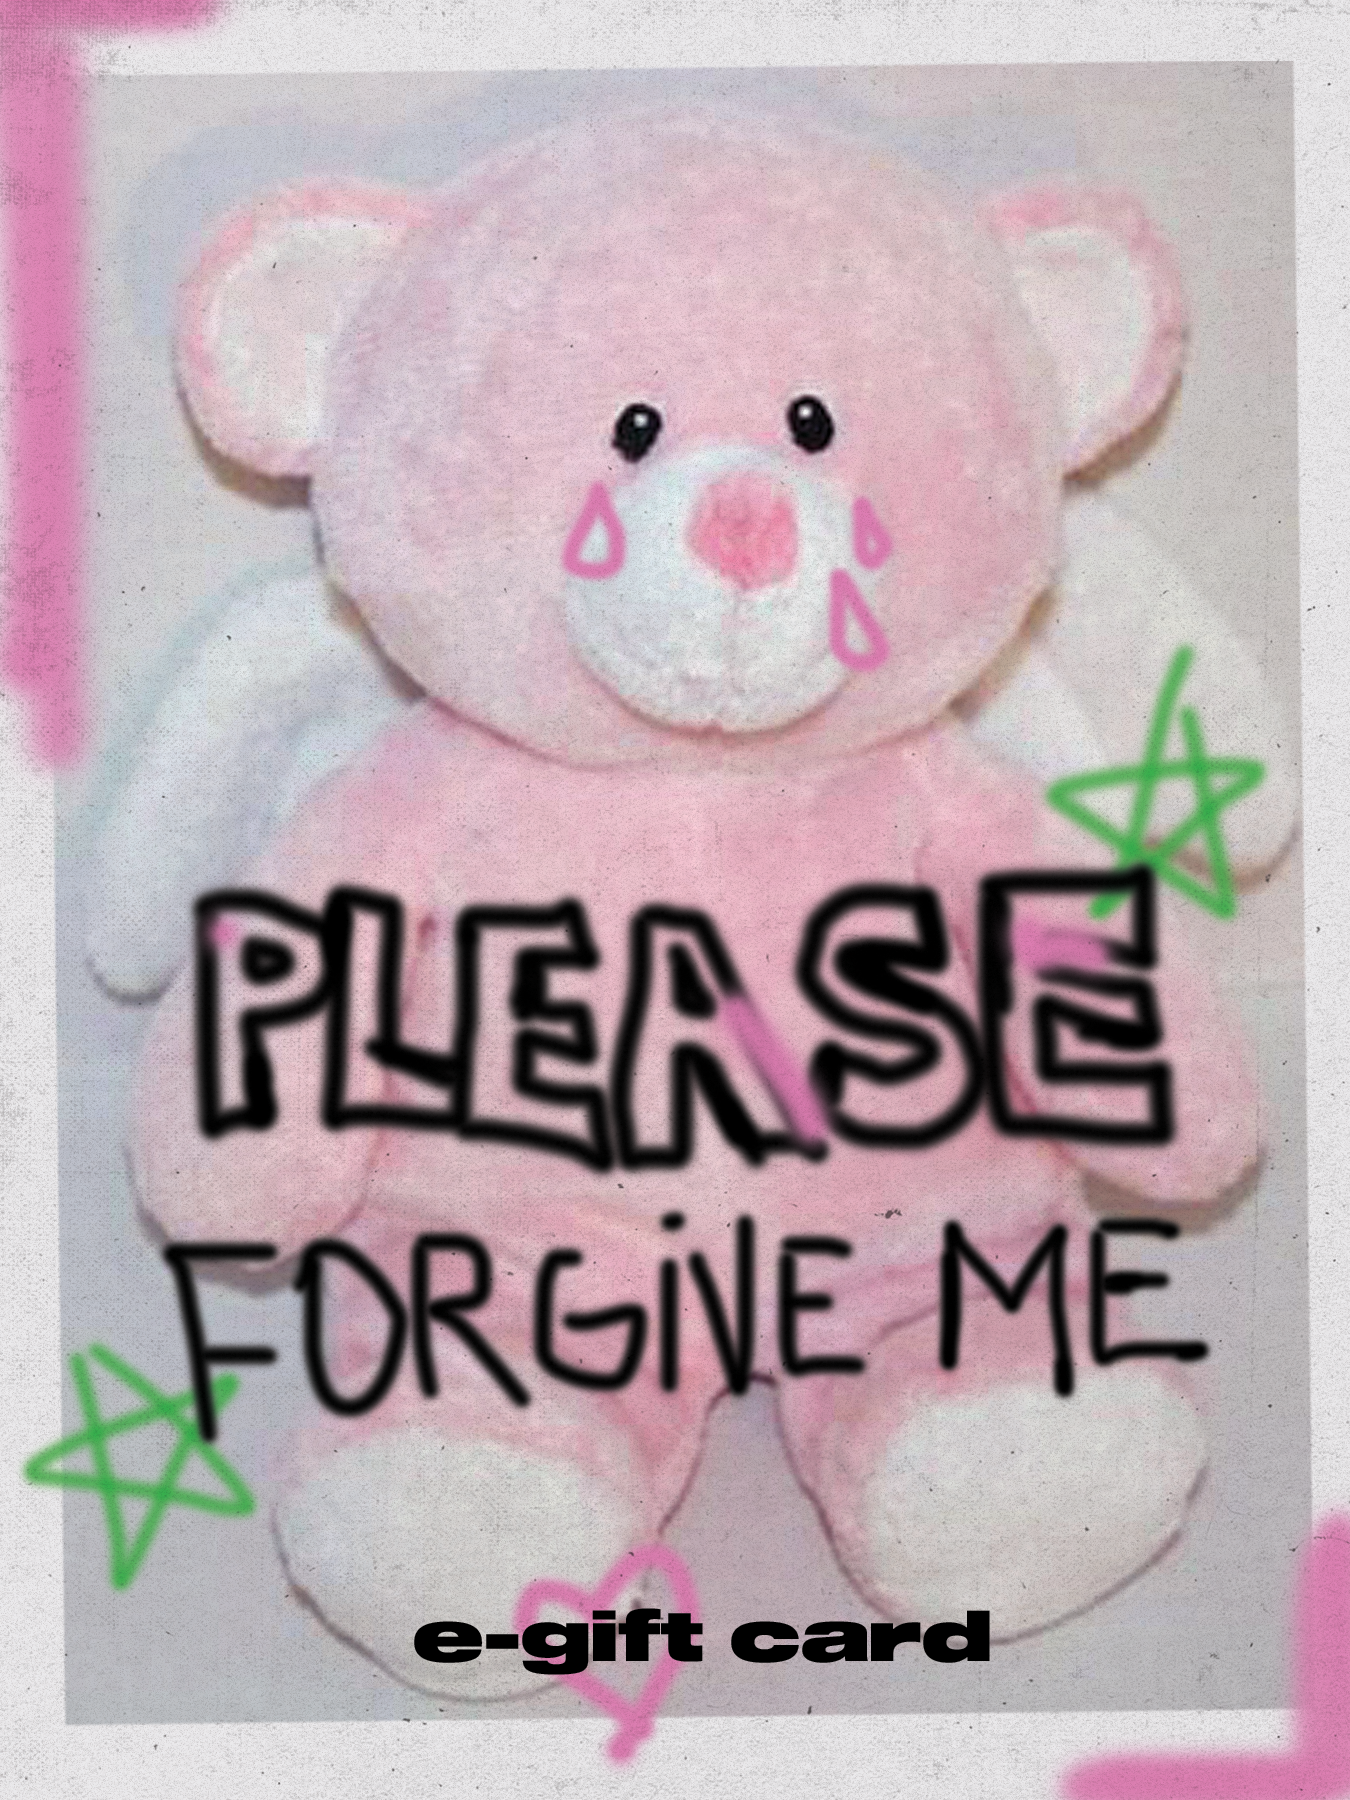 Please Forgive Me Teddy E-Gift Card